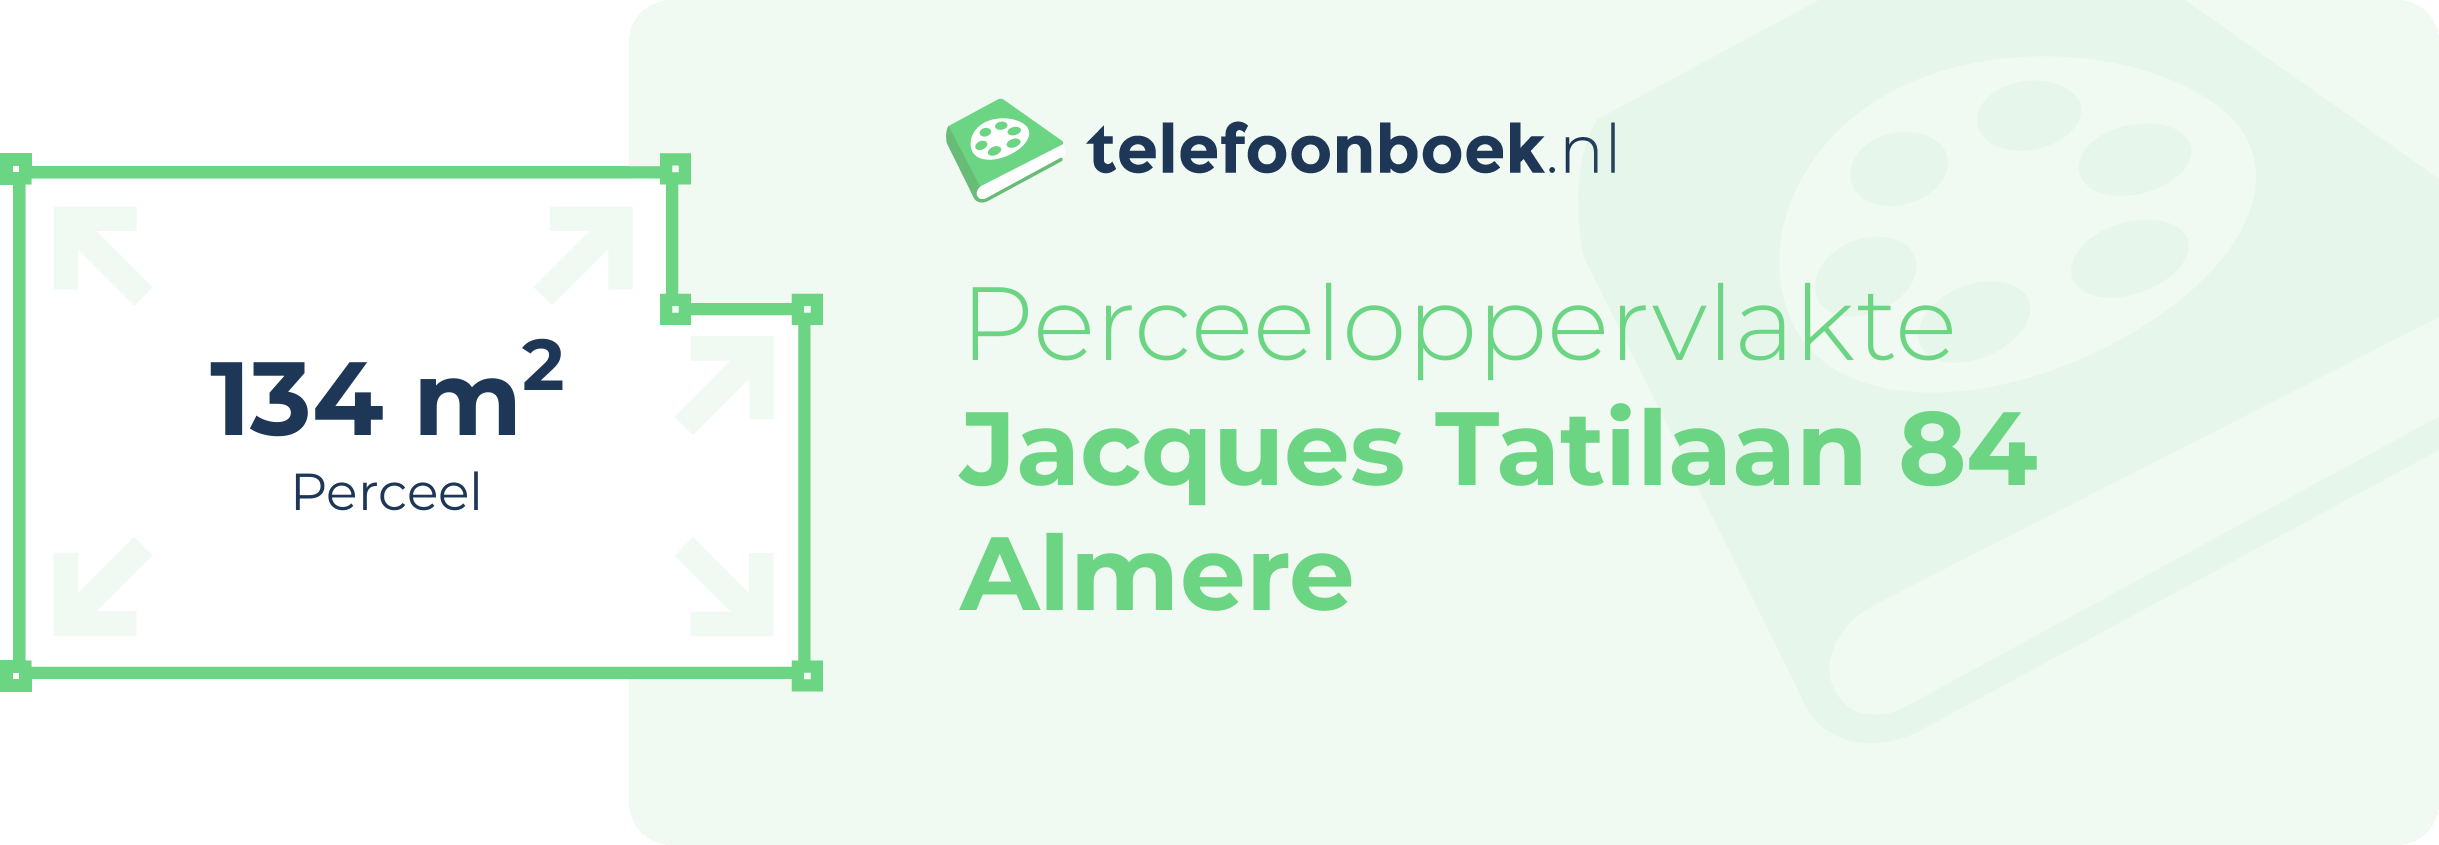 Perceeloppervlakte Jacques Tatilaan 84 Almere